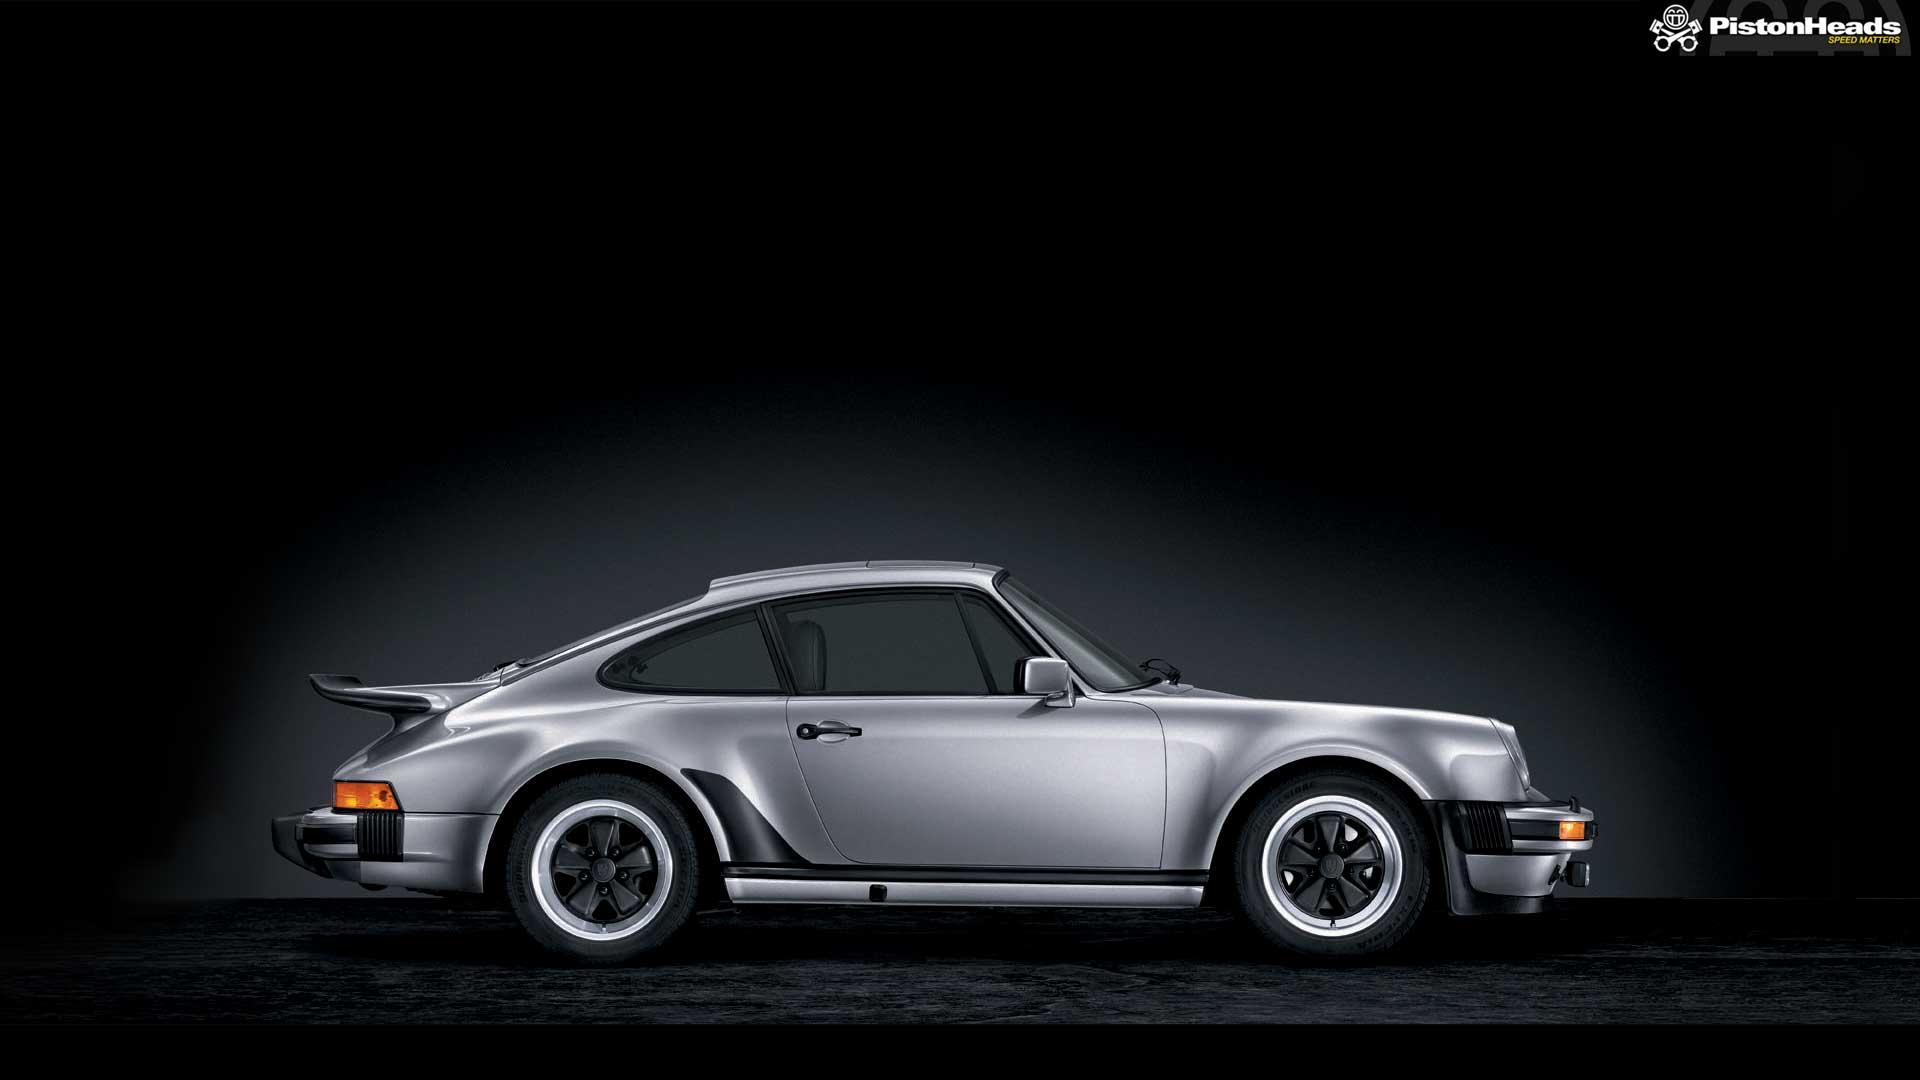 Vintage Porsche 911 Wallpapers Top Free Vintage Porsche 911 Backgrounds Wallpaperaccess